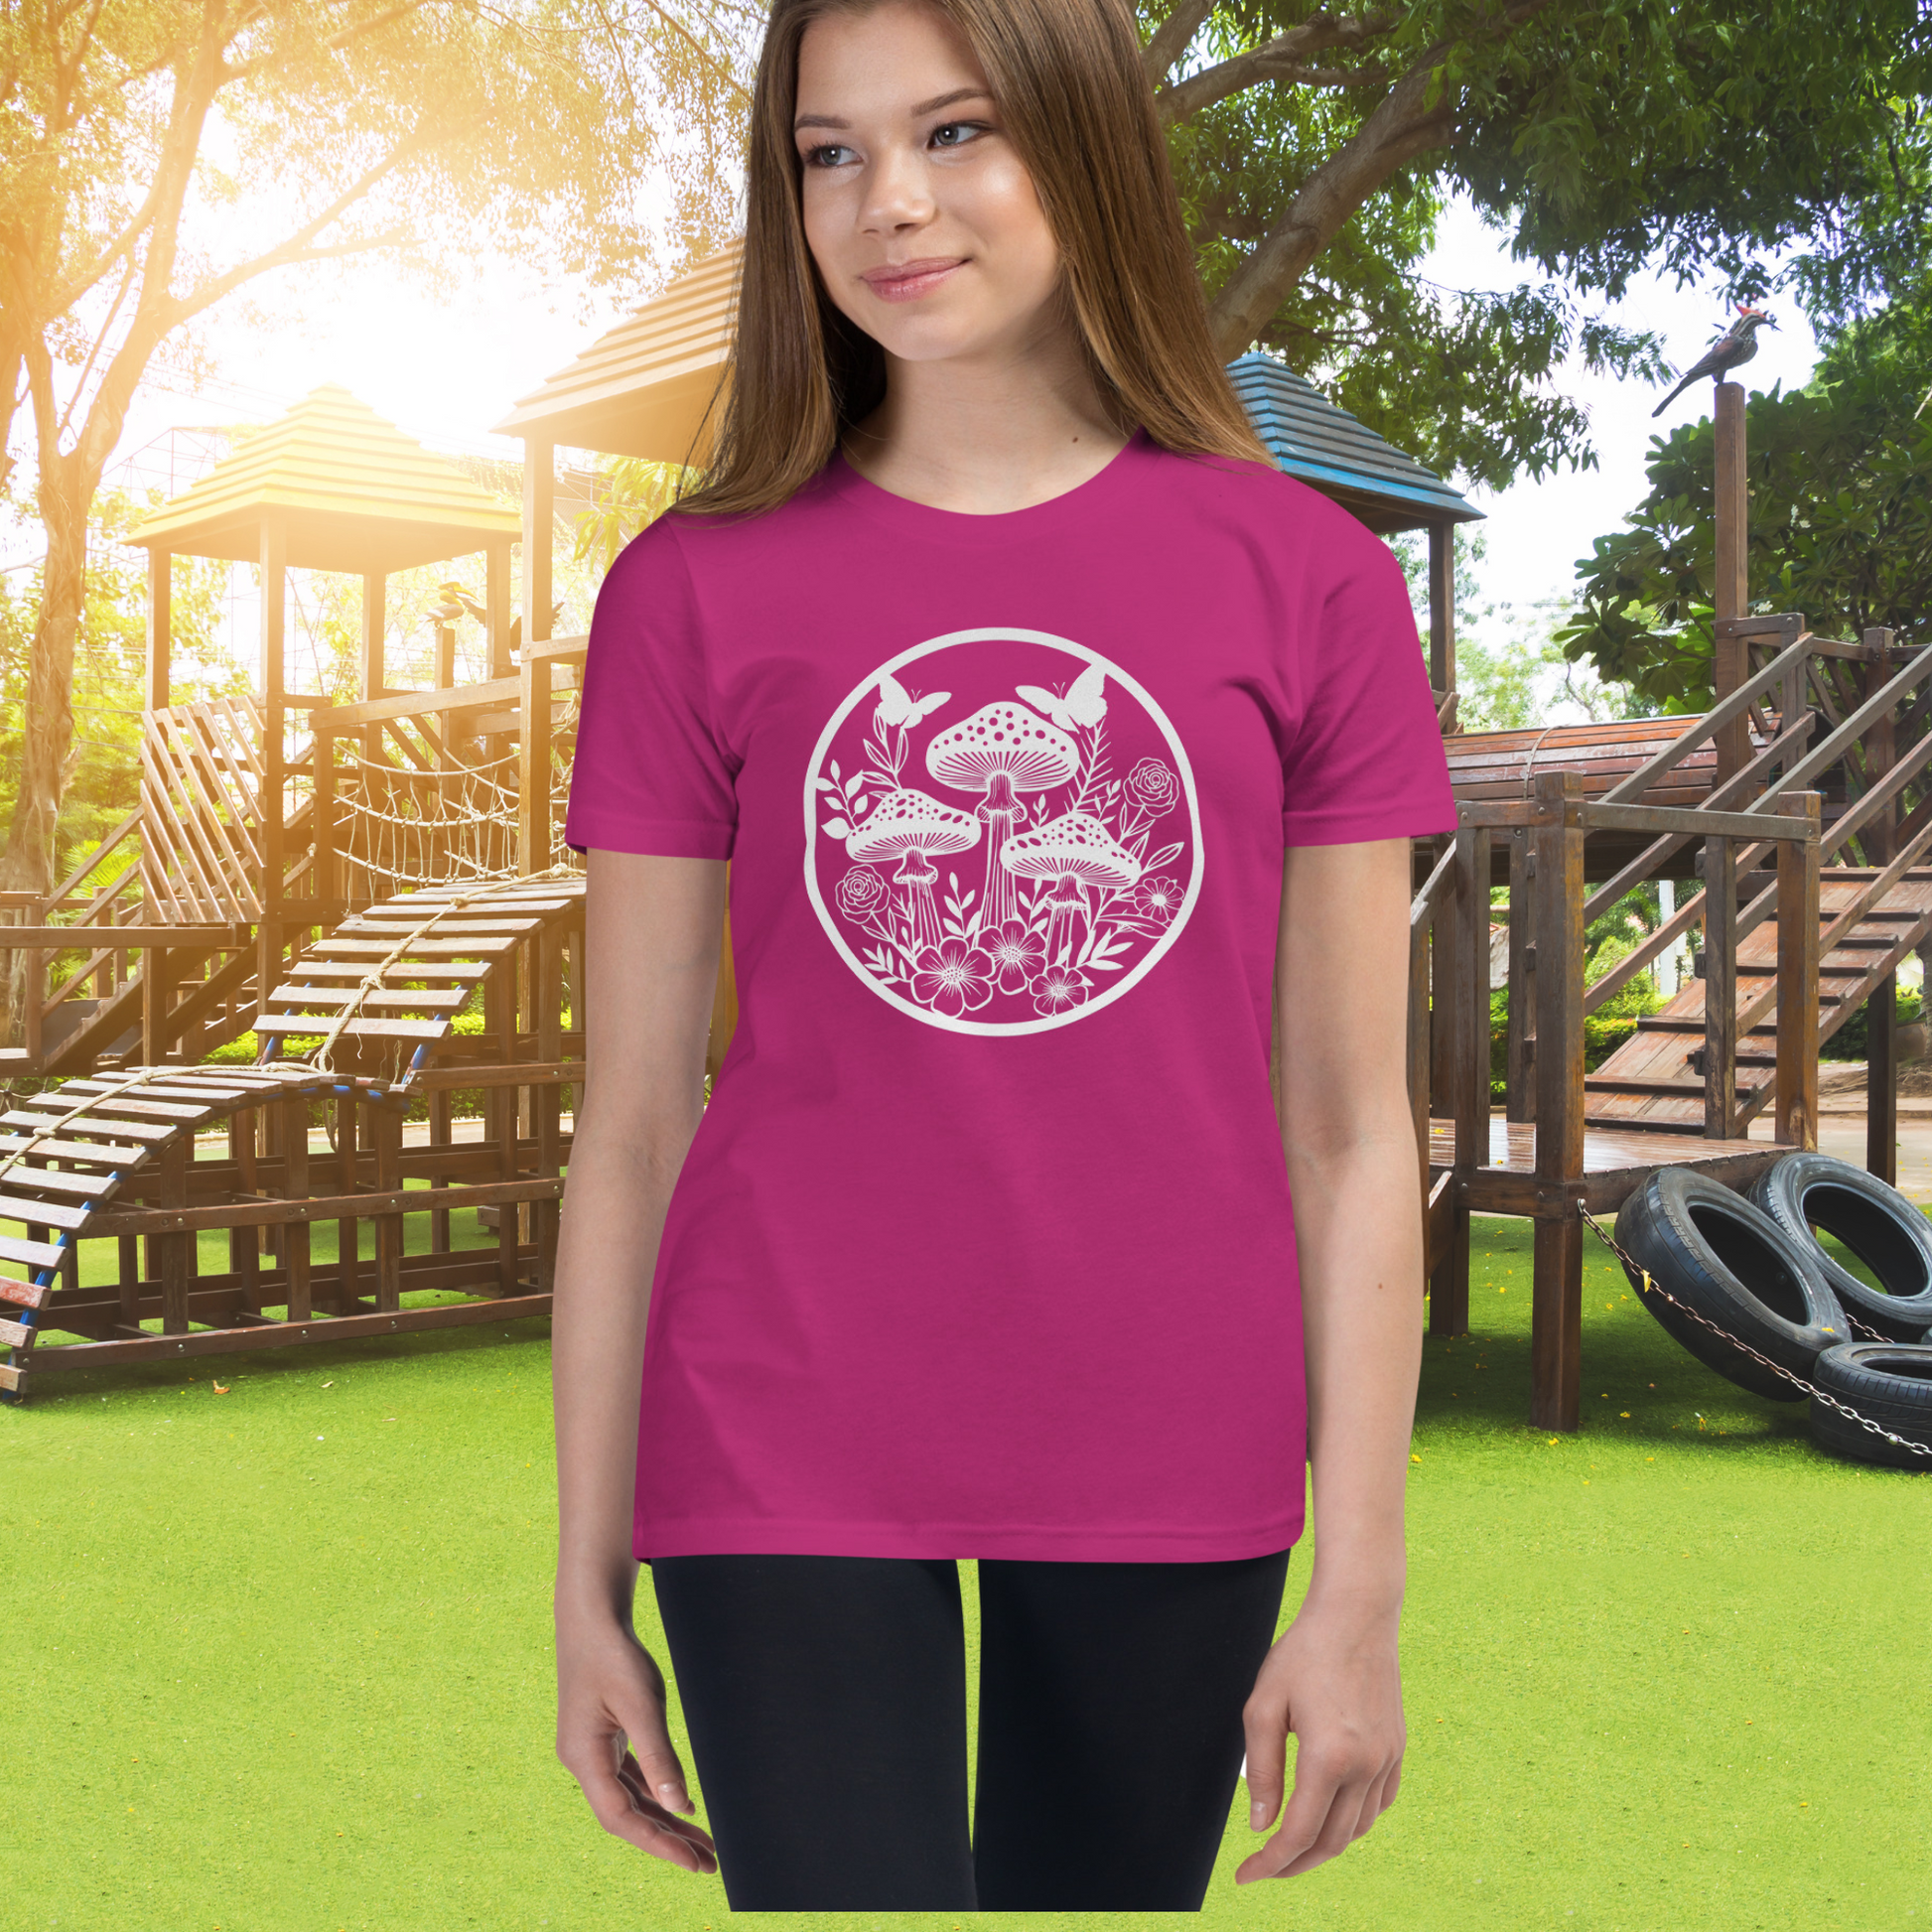 Mushroom Garden T-Shirt, Unisex Youth, Toadstool Apparel, Botanical Garden Nerd, Butterfly Girl, Matching Mom and Daughter Twinning Outfits